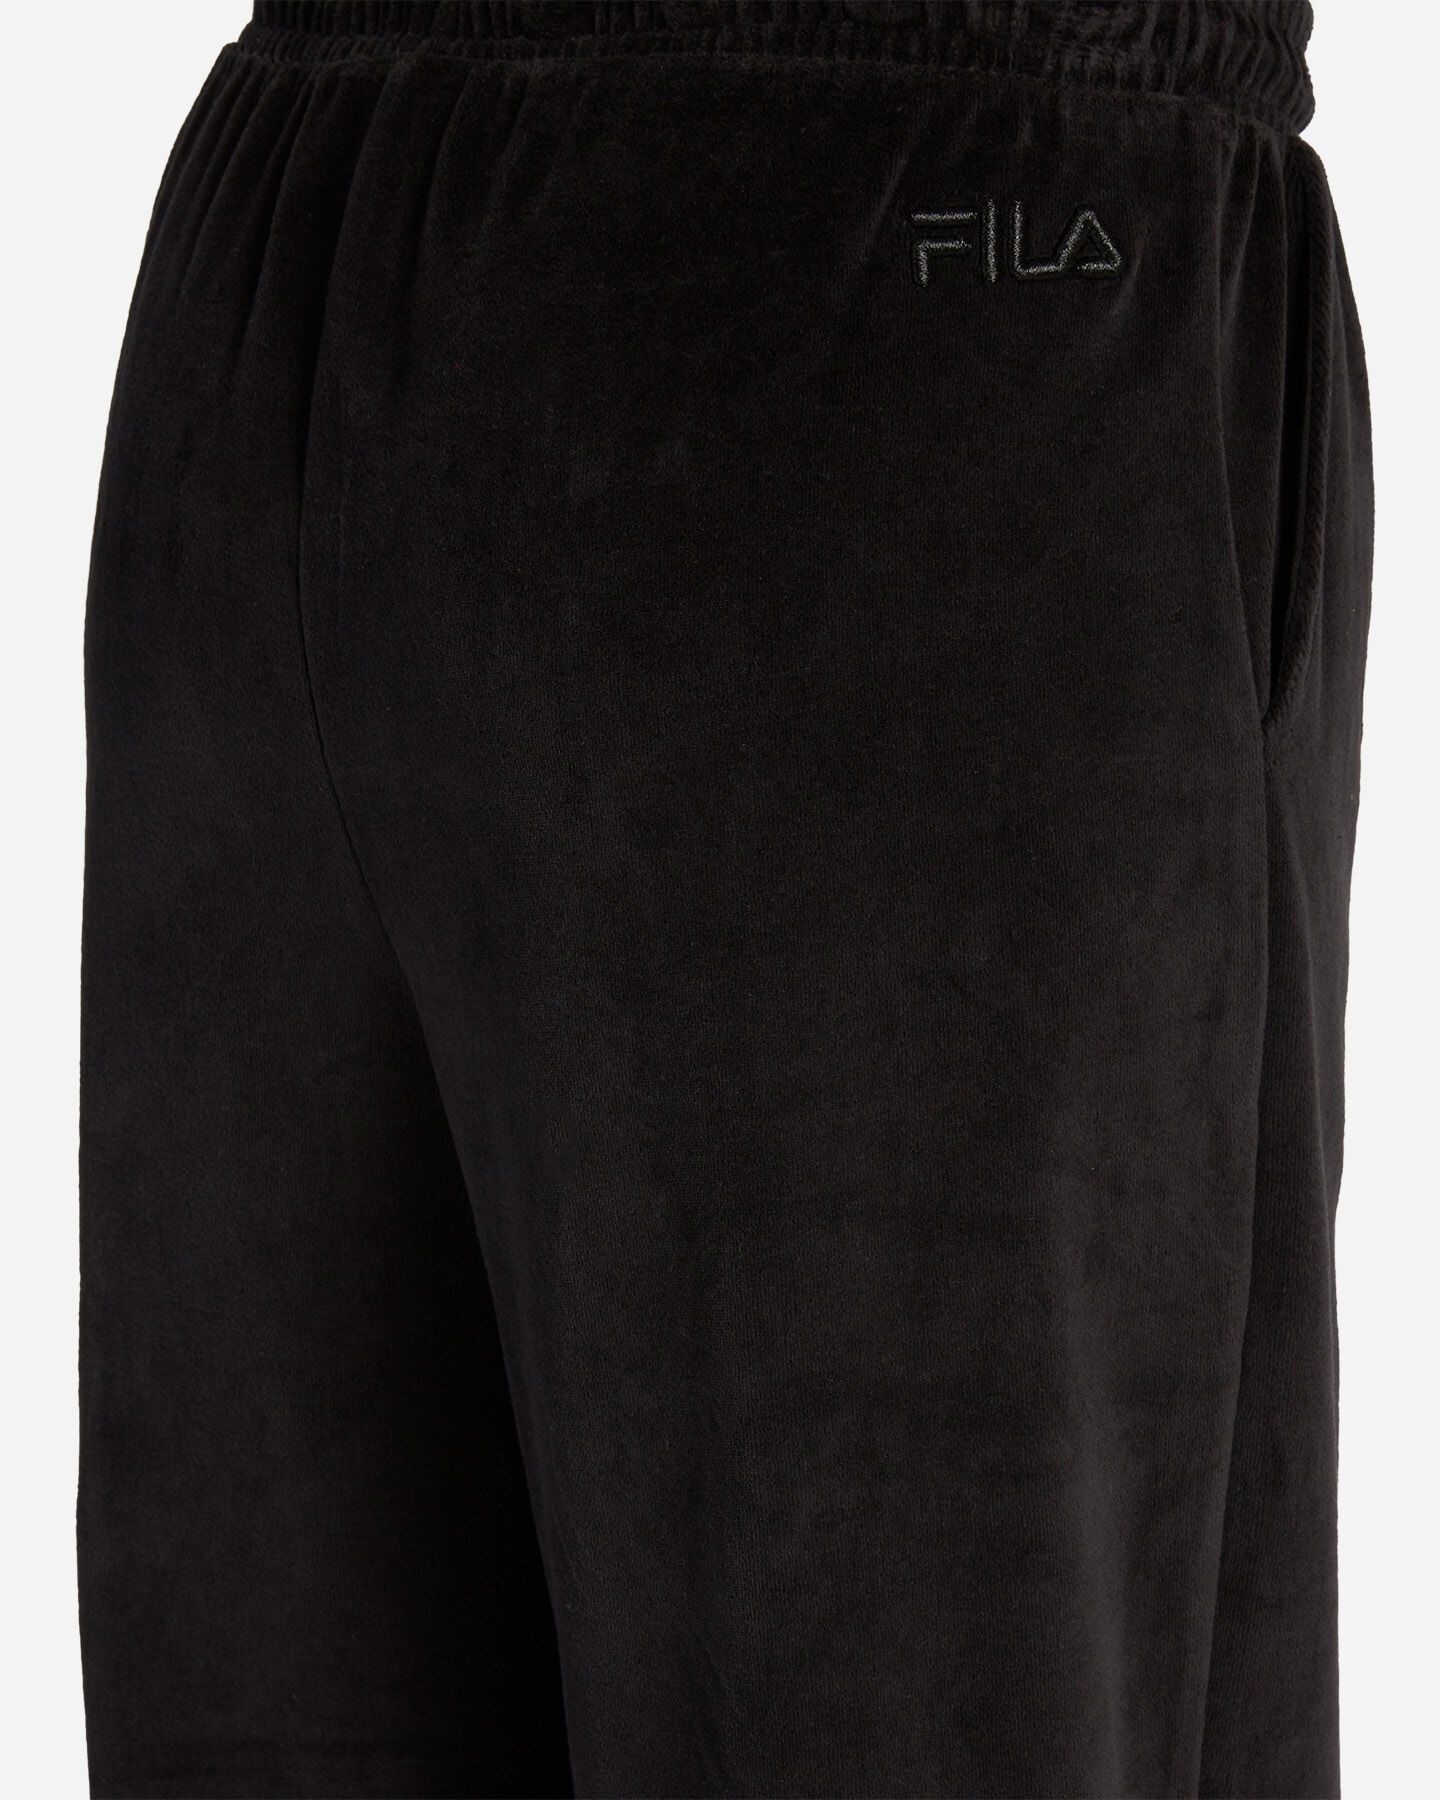  Pantalone FILA CITYWEAR W S4107720|050|XS scatto 3